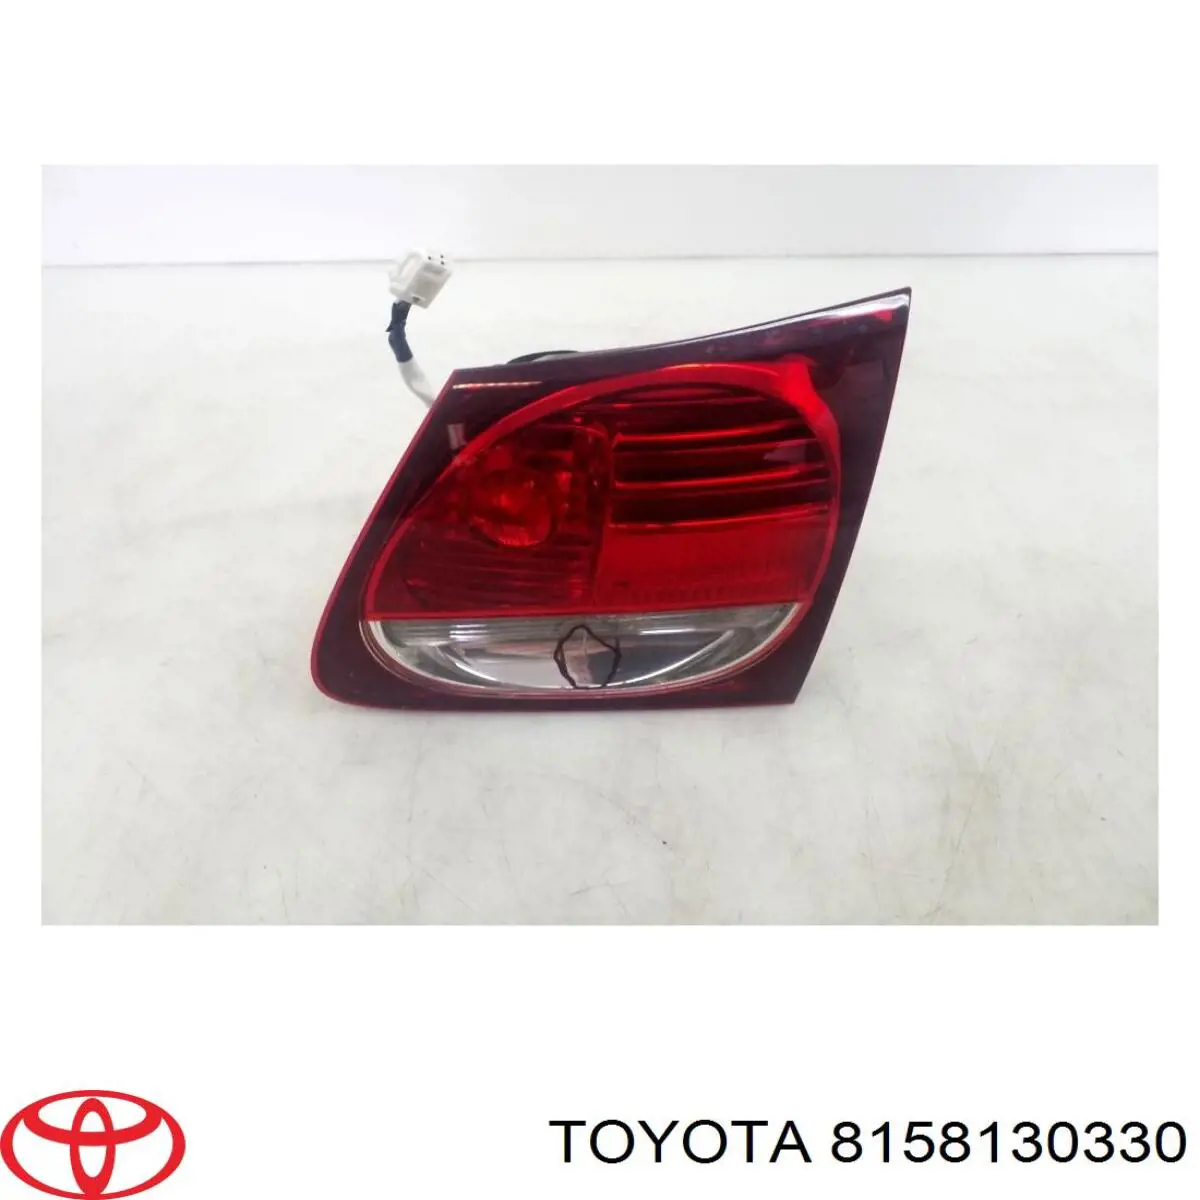 8158130330 Toyota lanterna traseira direita interna